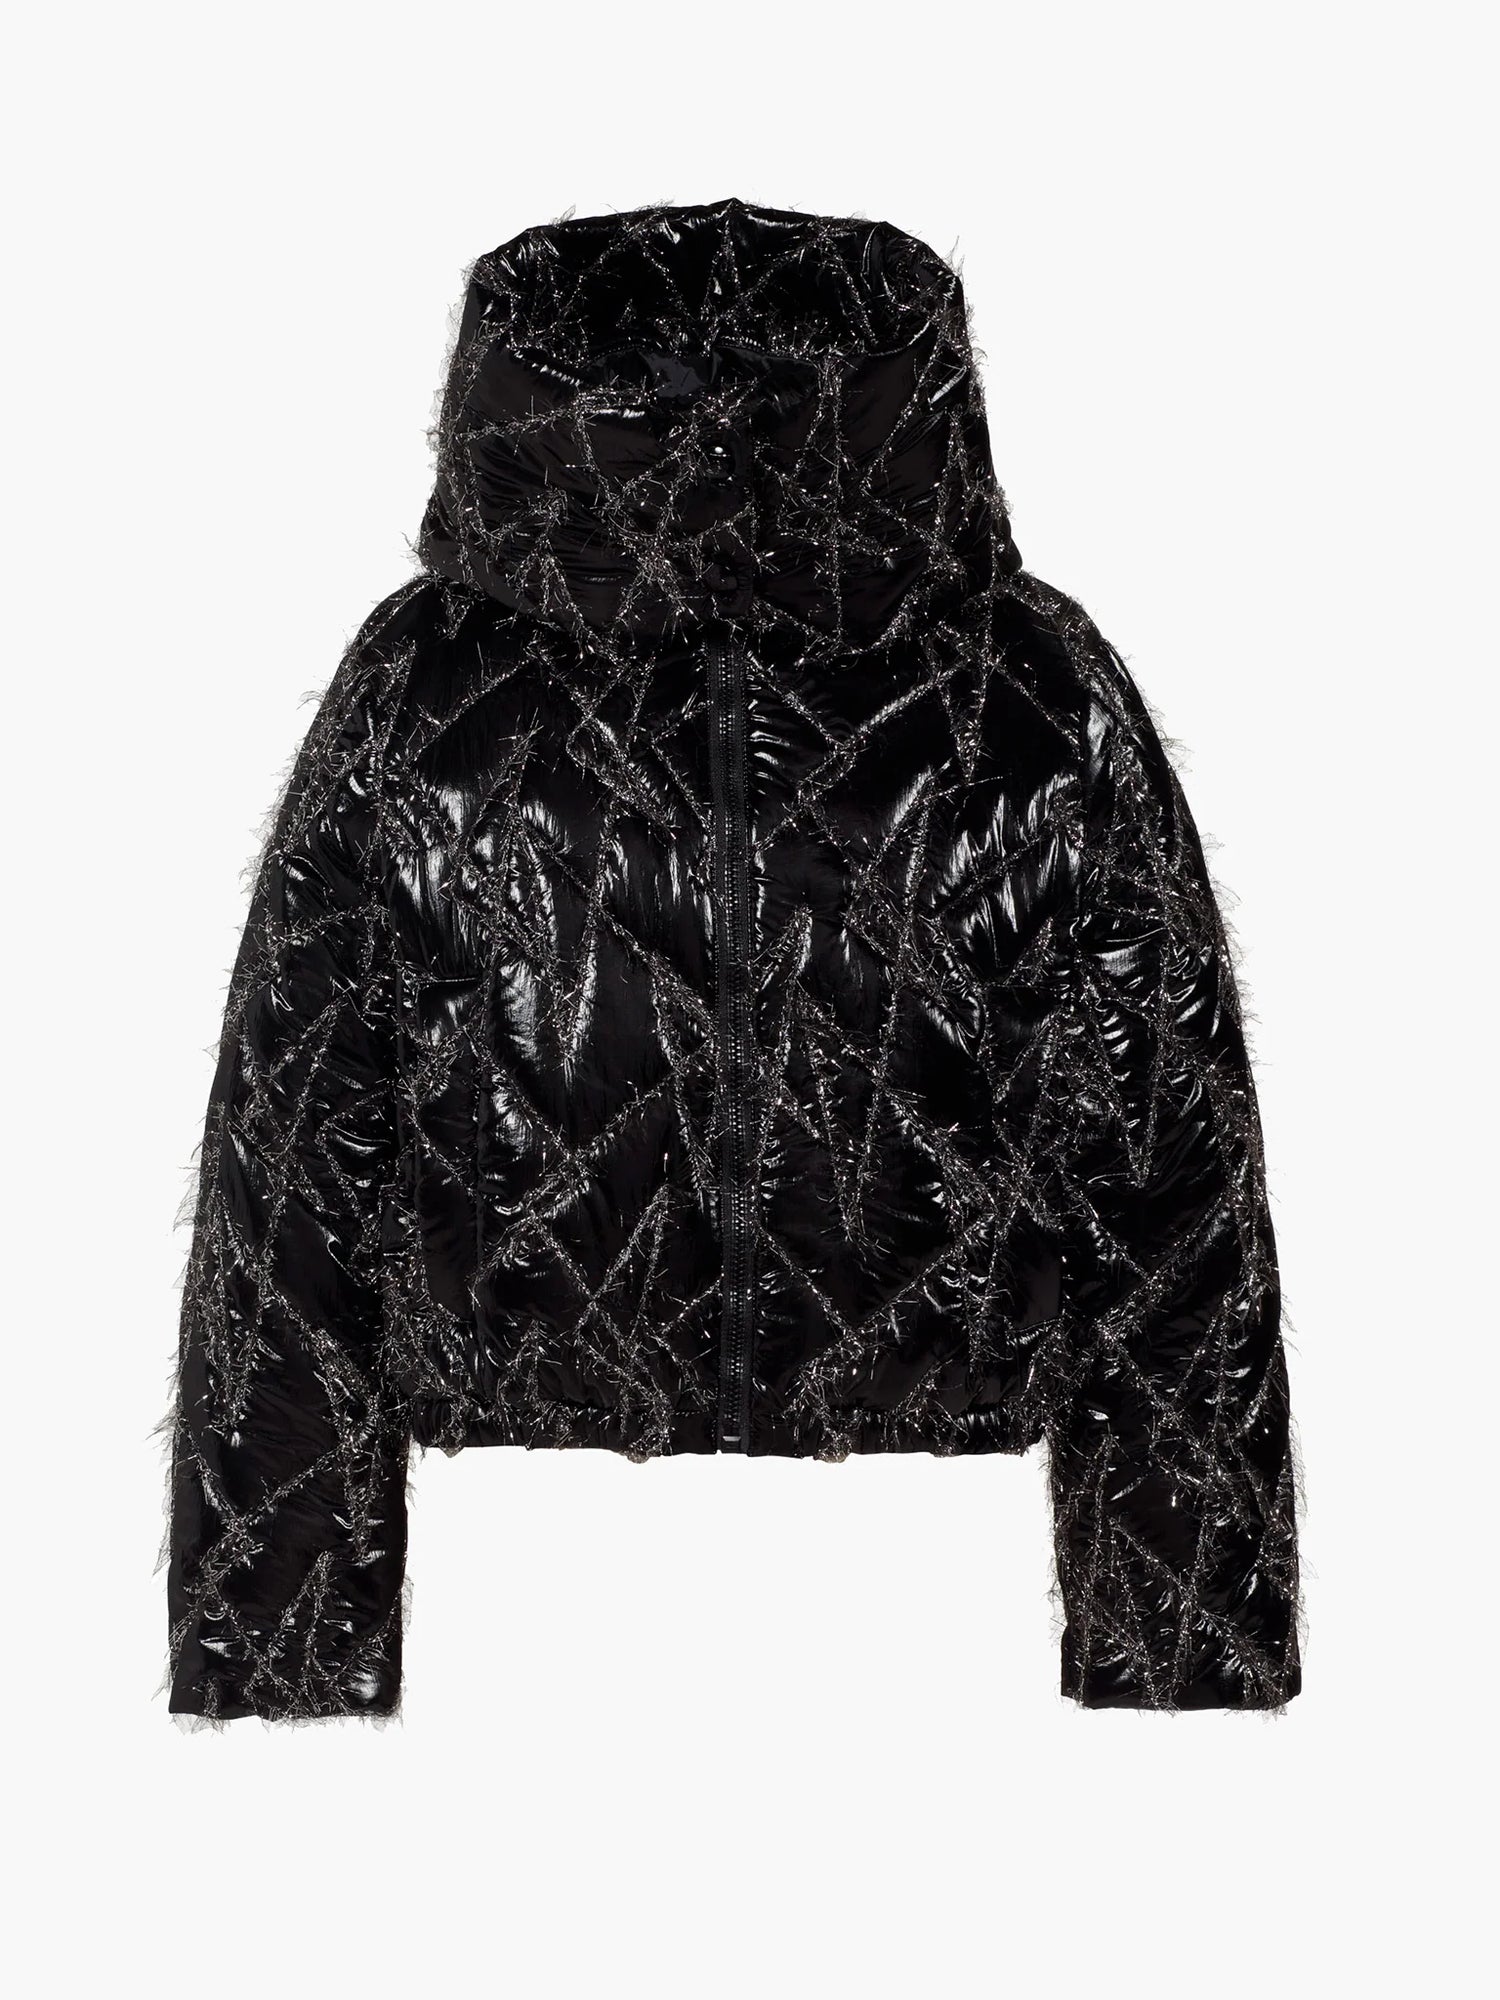 STARRYSKY ski jacket, black